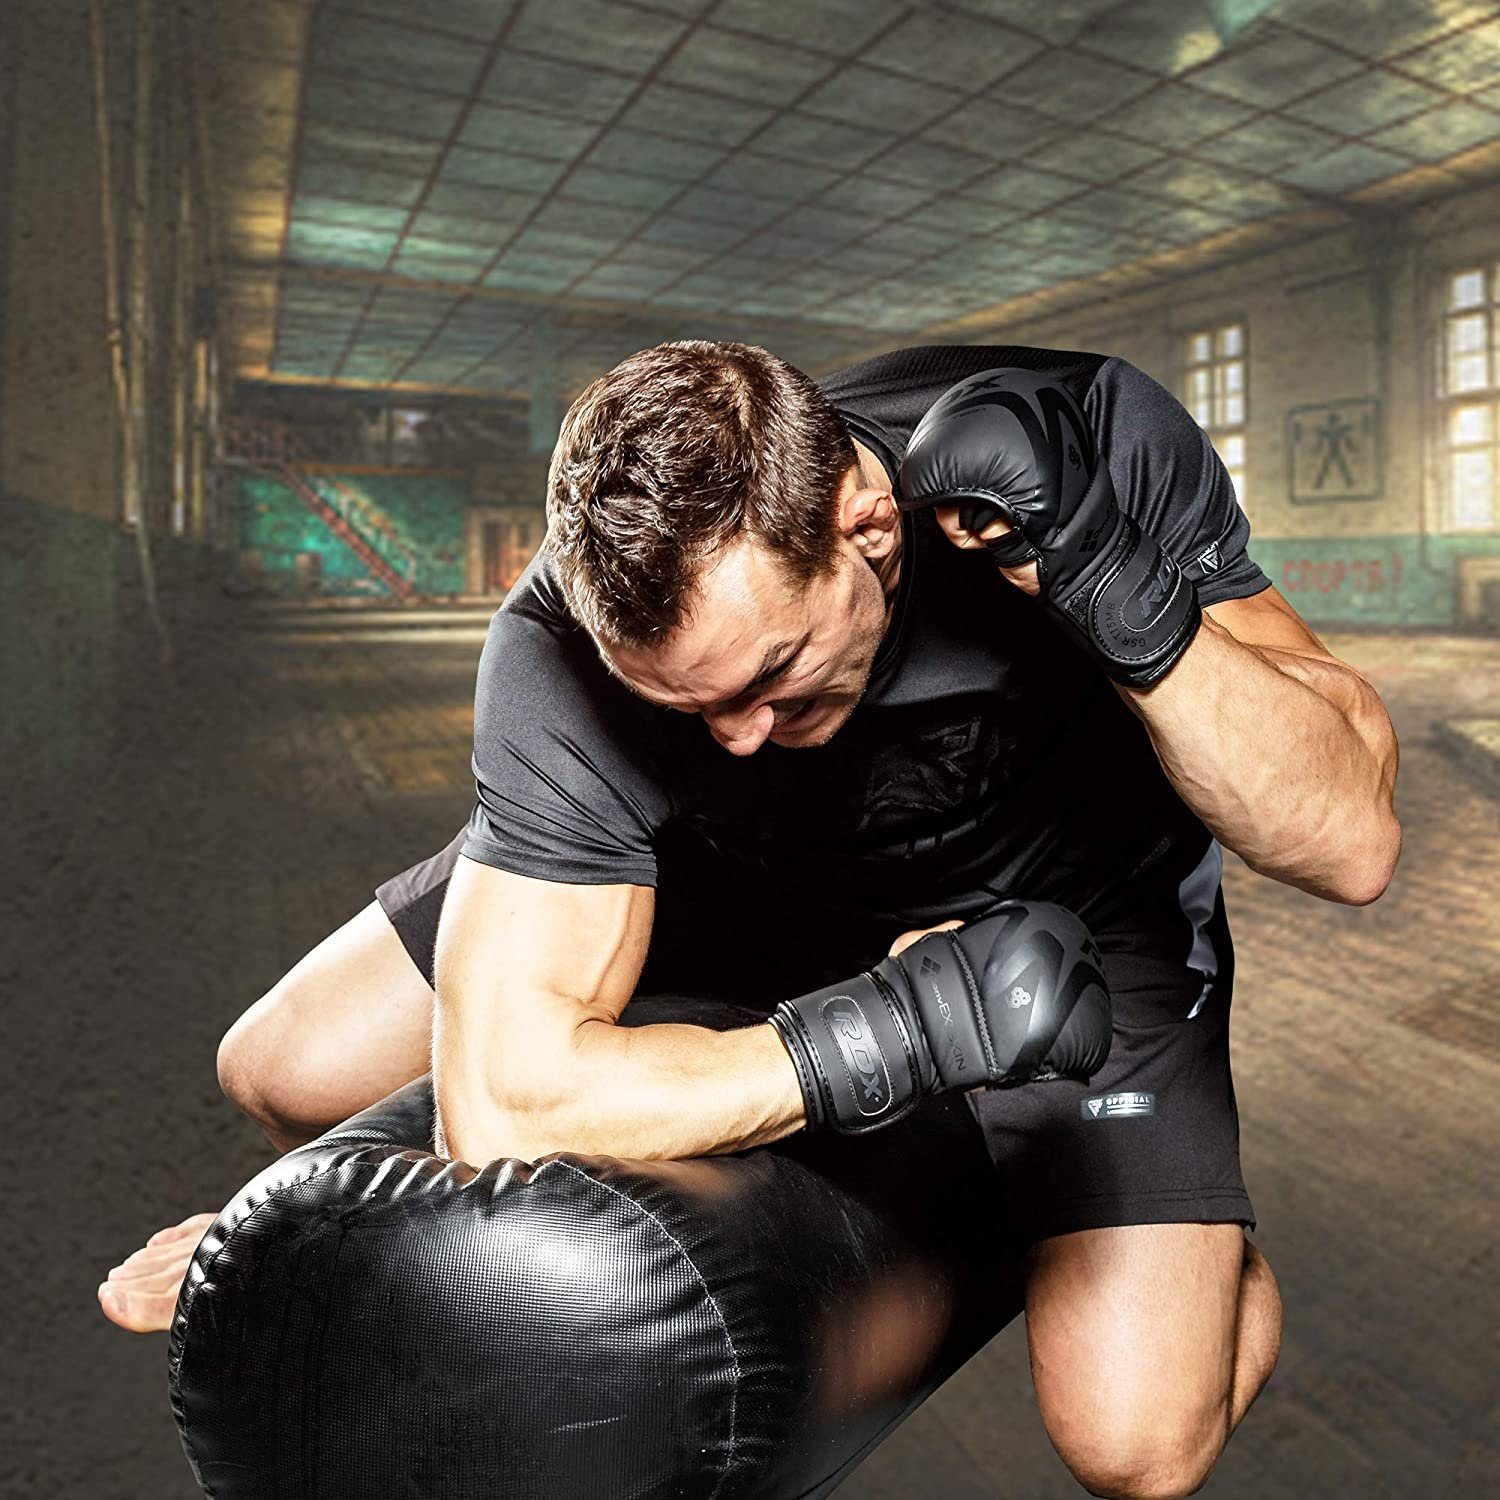 Professionelle Kampfsport Sports Kickboxen MMA-Handschuhe Handschuhe, RDX Sparring MMA RDX